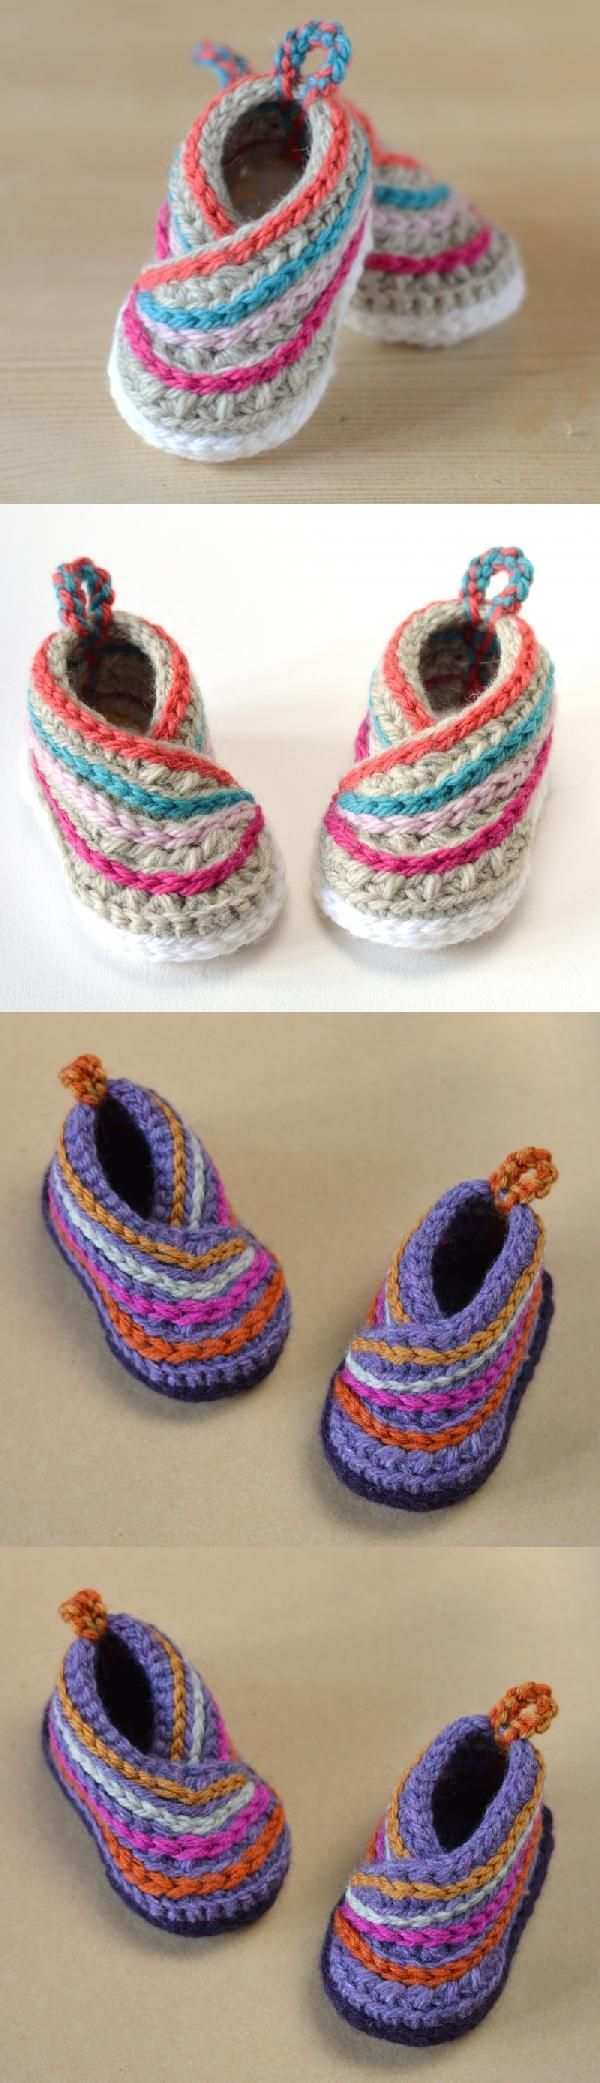 Baby Kimono Shoes Crochet Pattern By Matilda S Meadow Babyschuhe Stricken Schuhe Hakeln